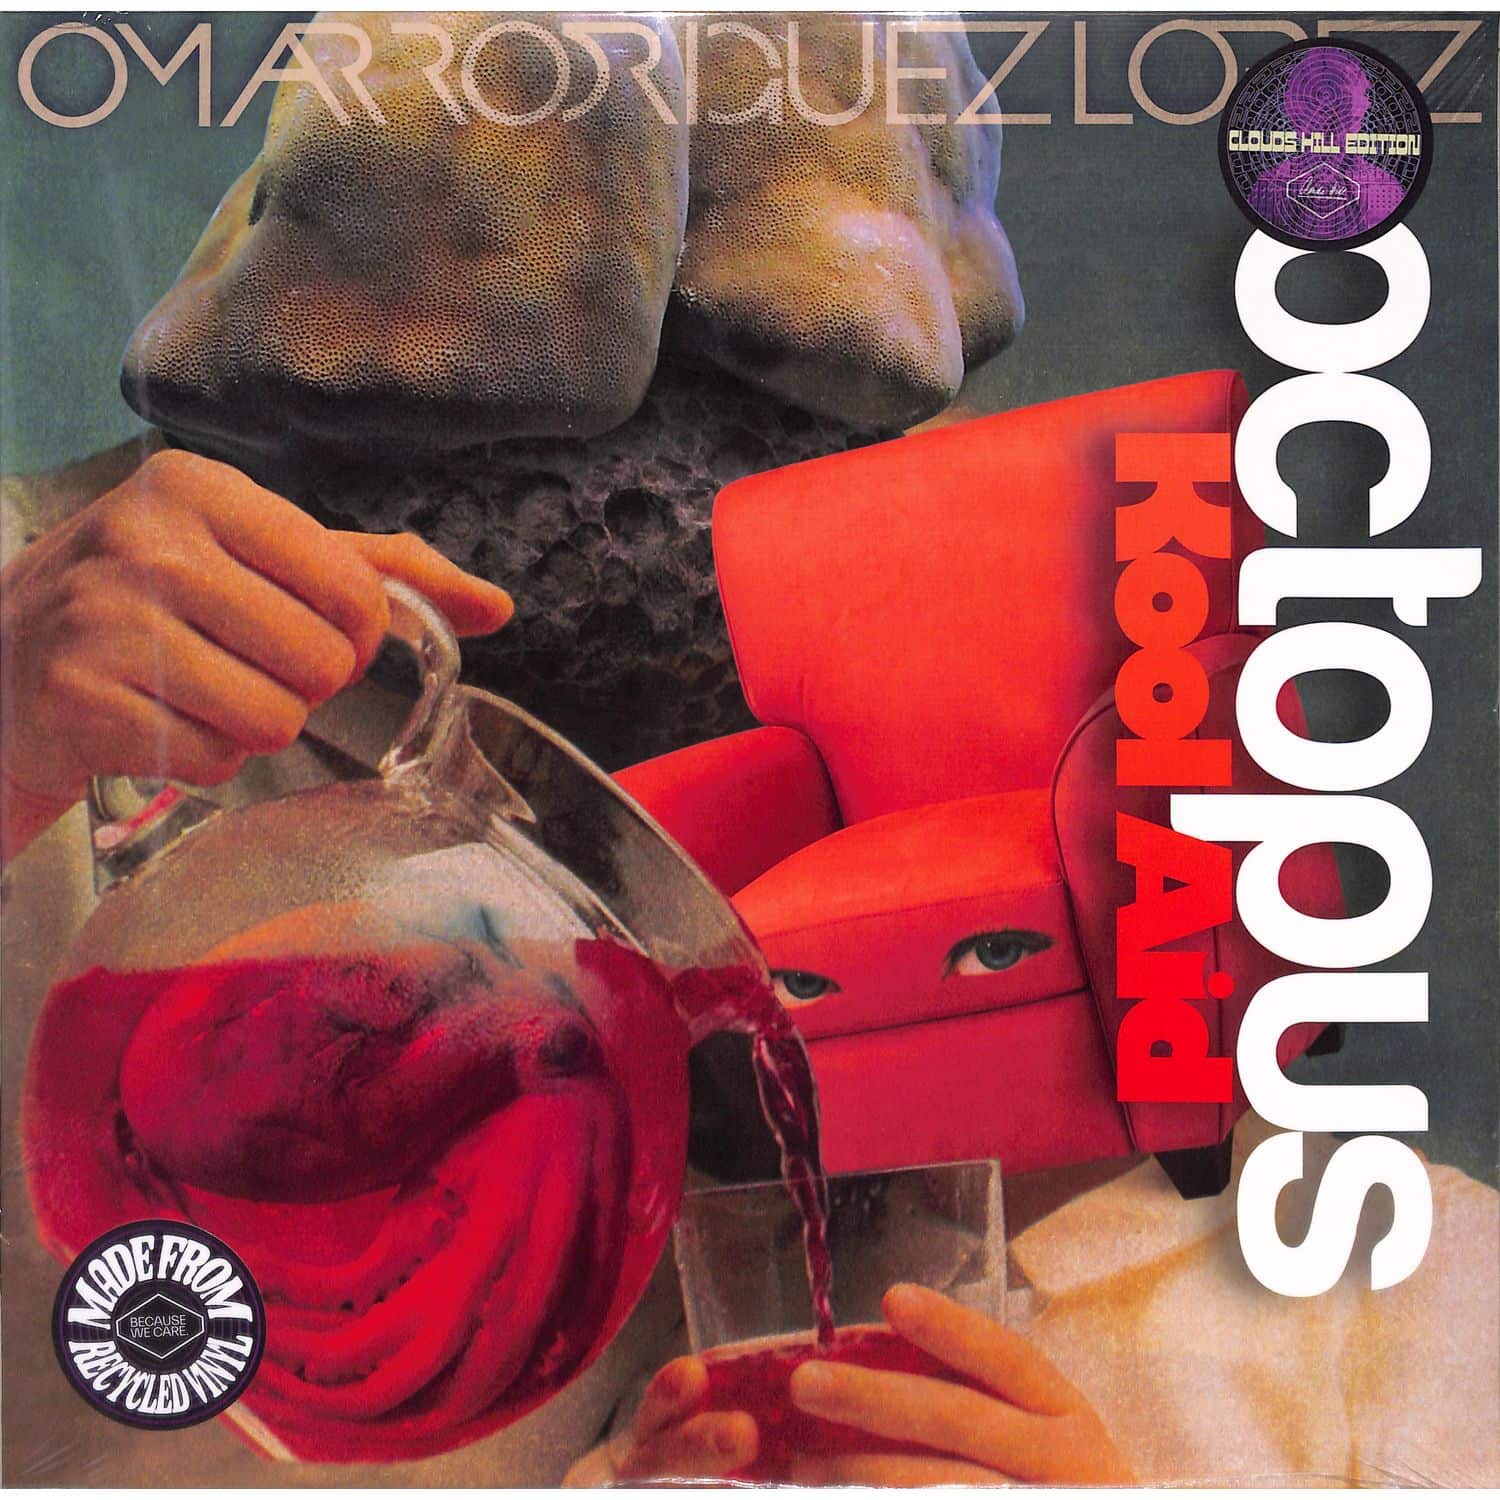 Omar Rodrguez-Lpez - OCTOPUS KOOL AID 